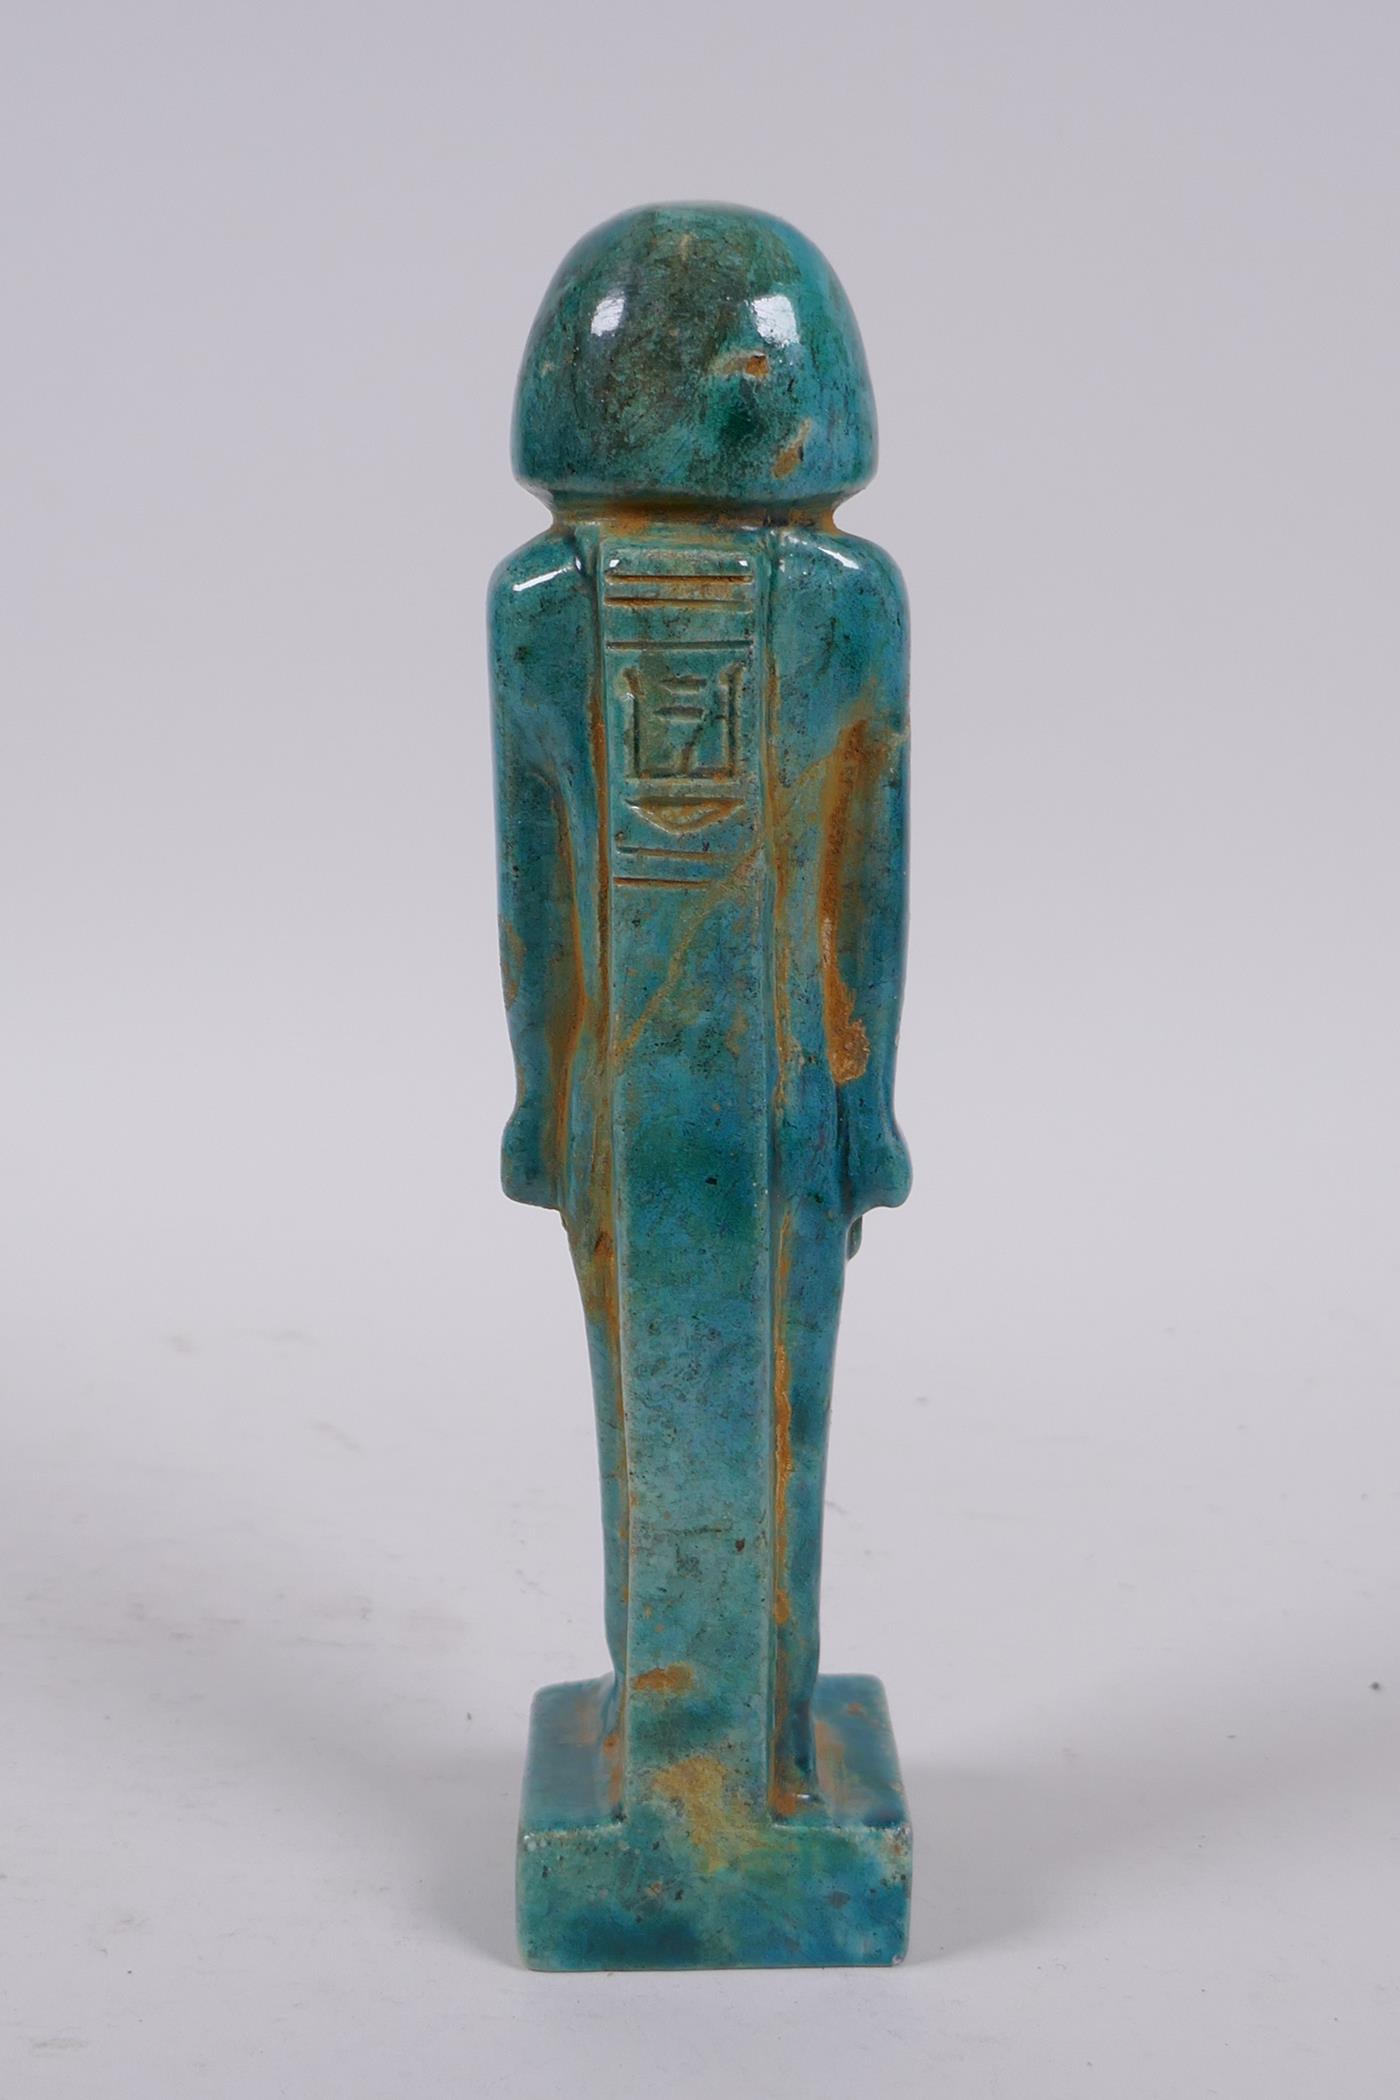 An Egyptian faience turquoise glaze shabti, 21cm high - Image 3 of 3